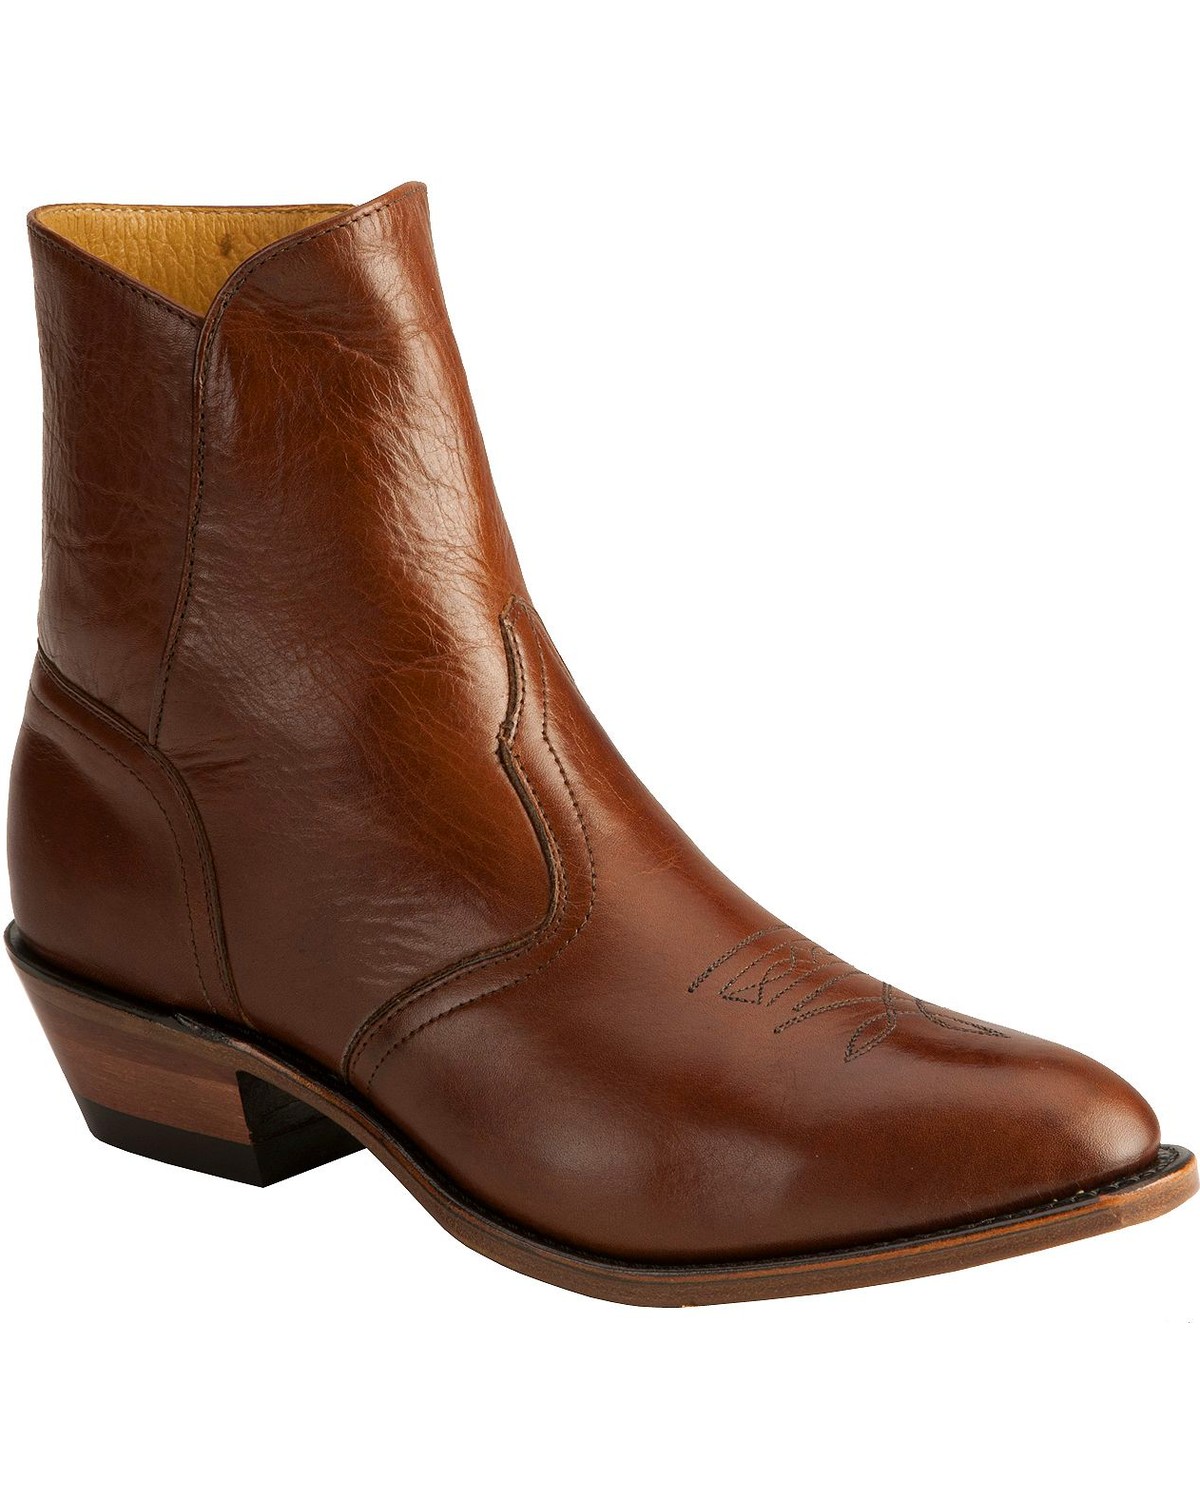 Boulet Men's Side-Zip Western Boots - Medium Toe